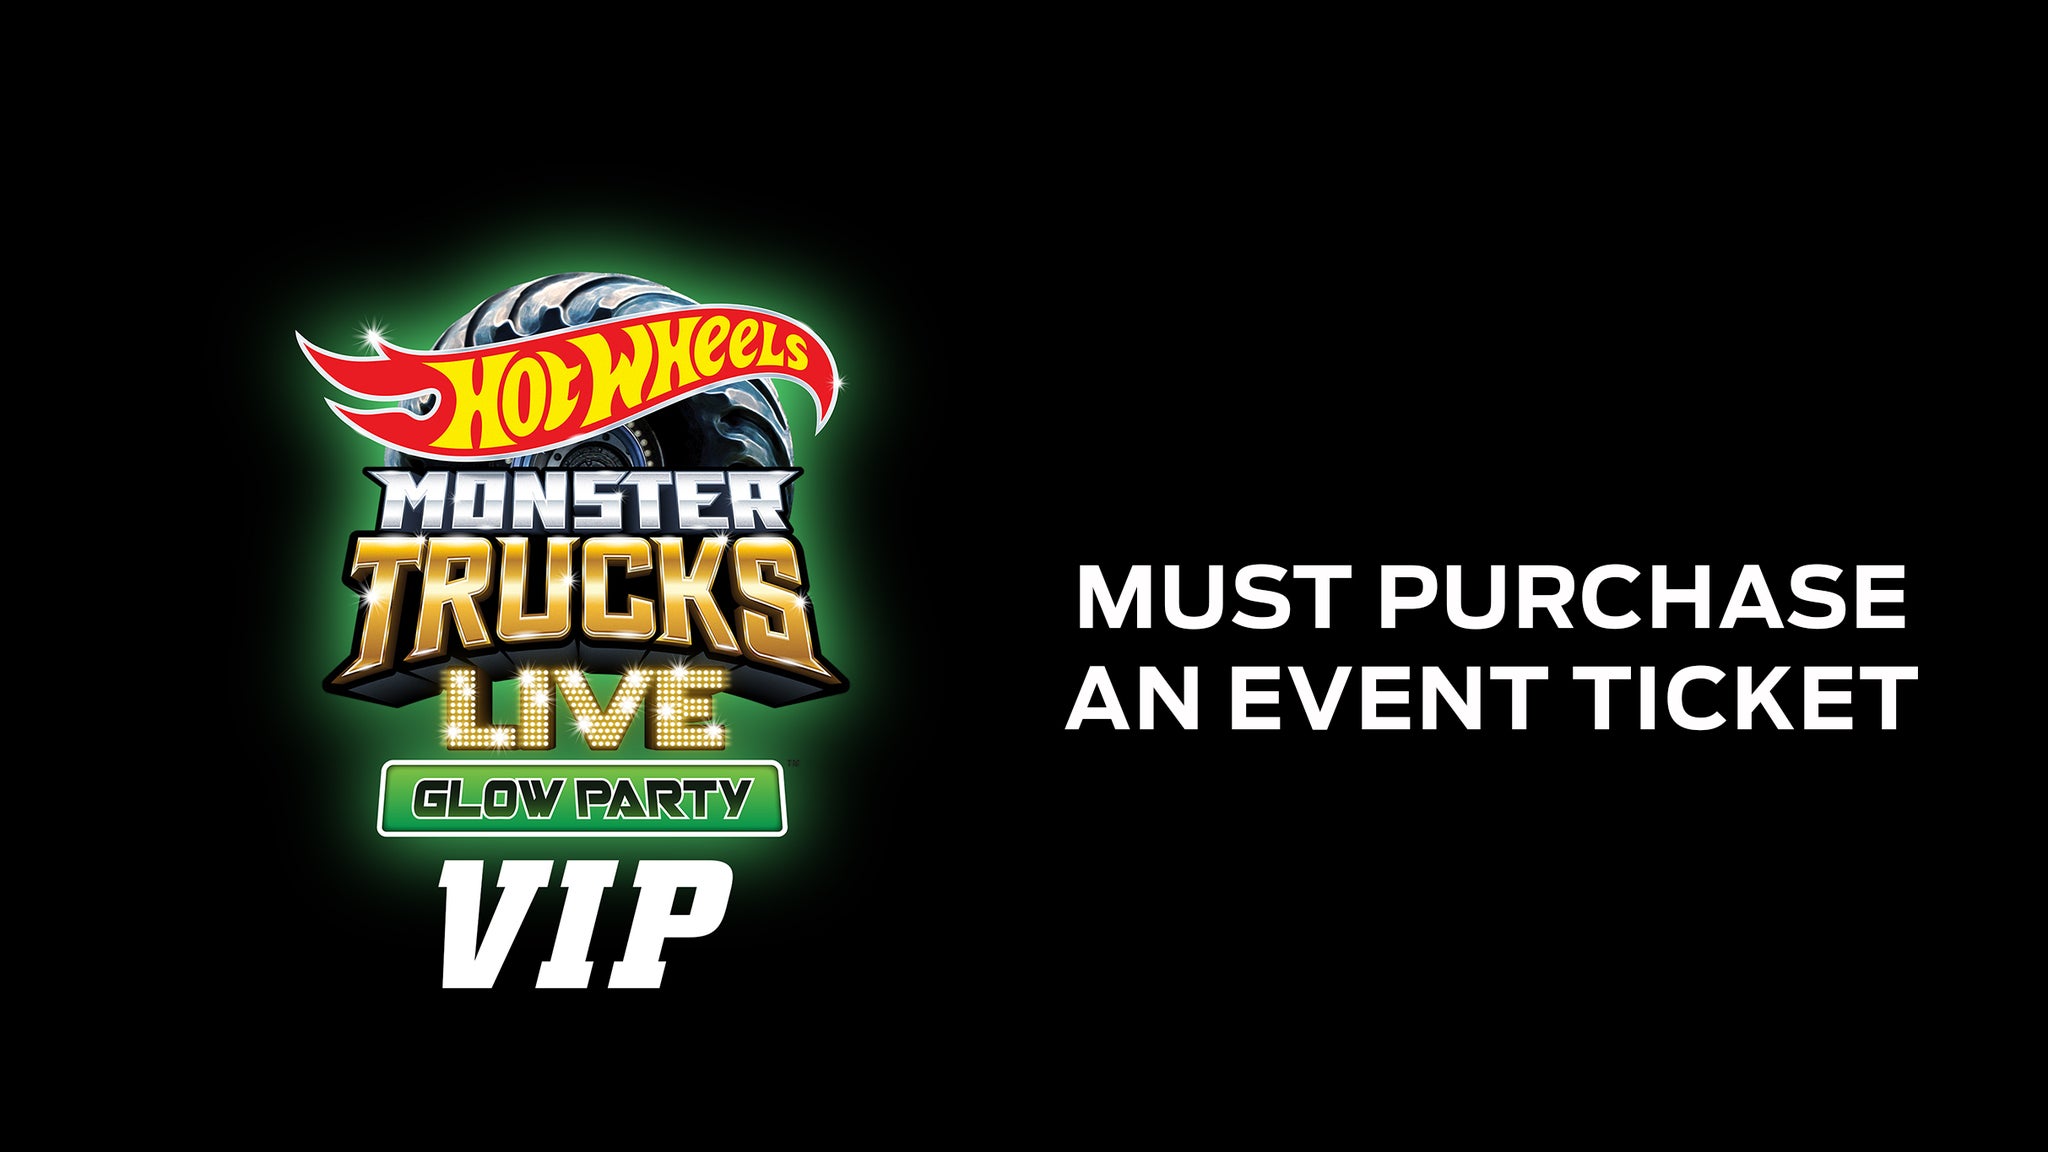 Hot Wheels VIP Backstage Experience starts at 4:30pm